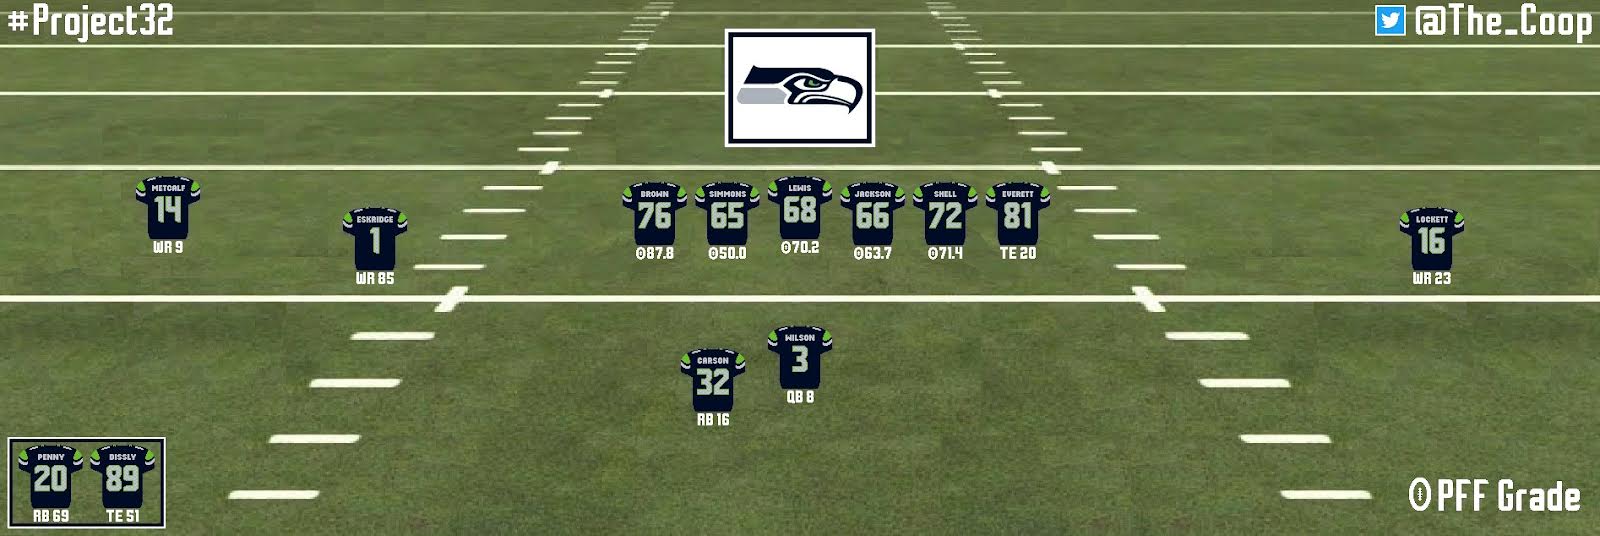 Seattle Seahawks 2021 projections